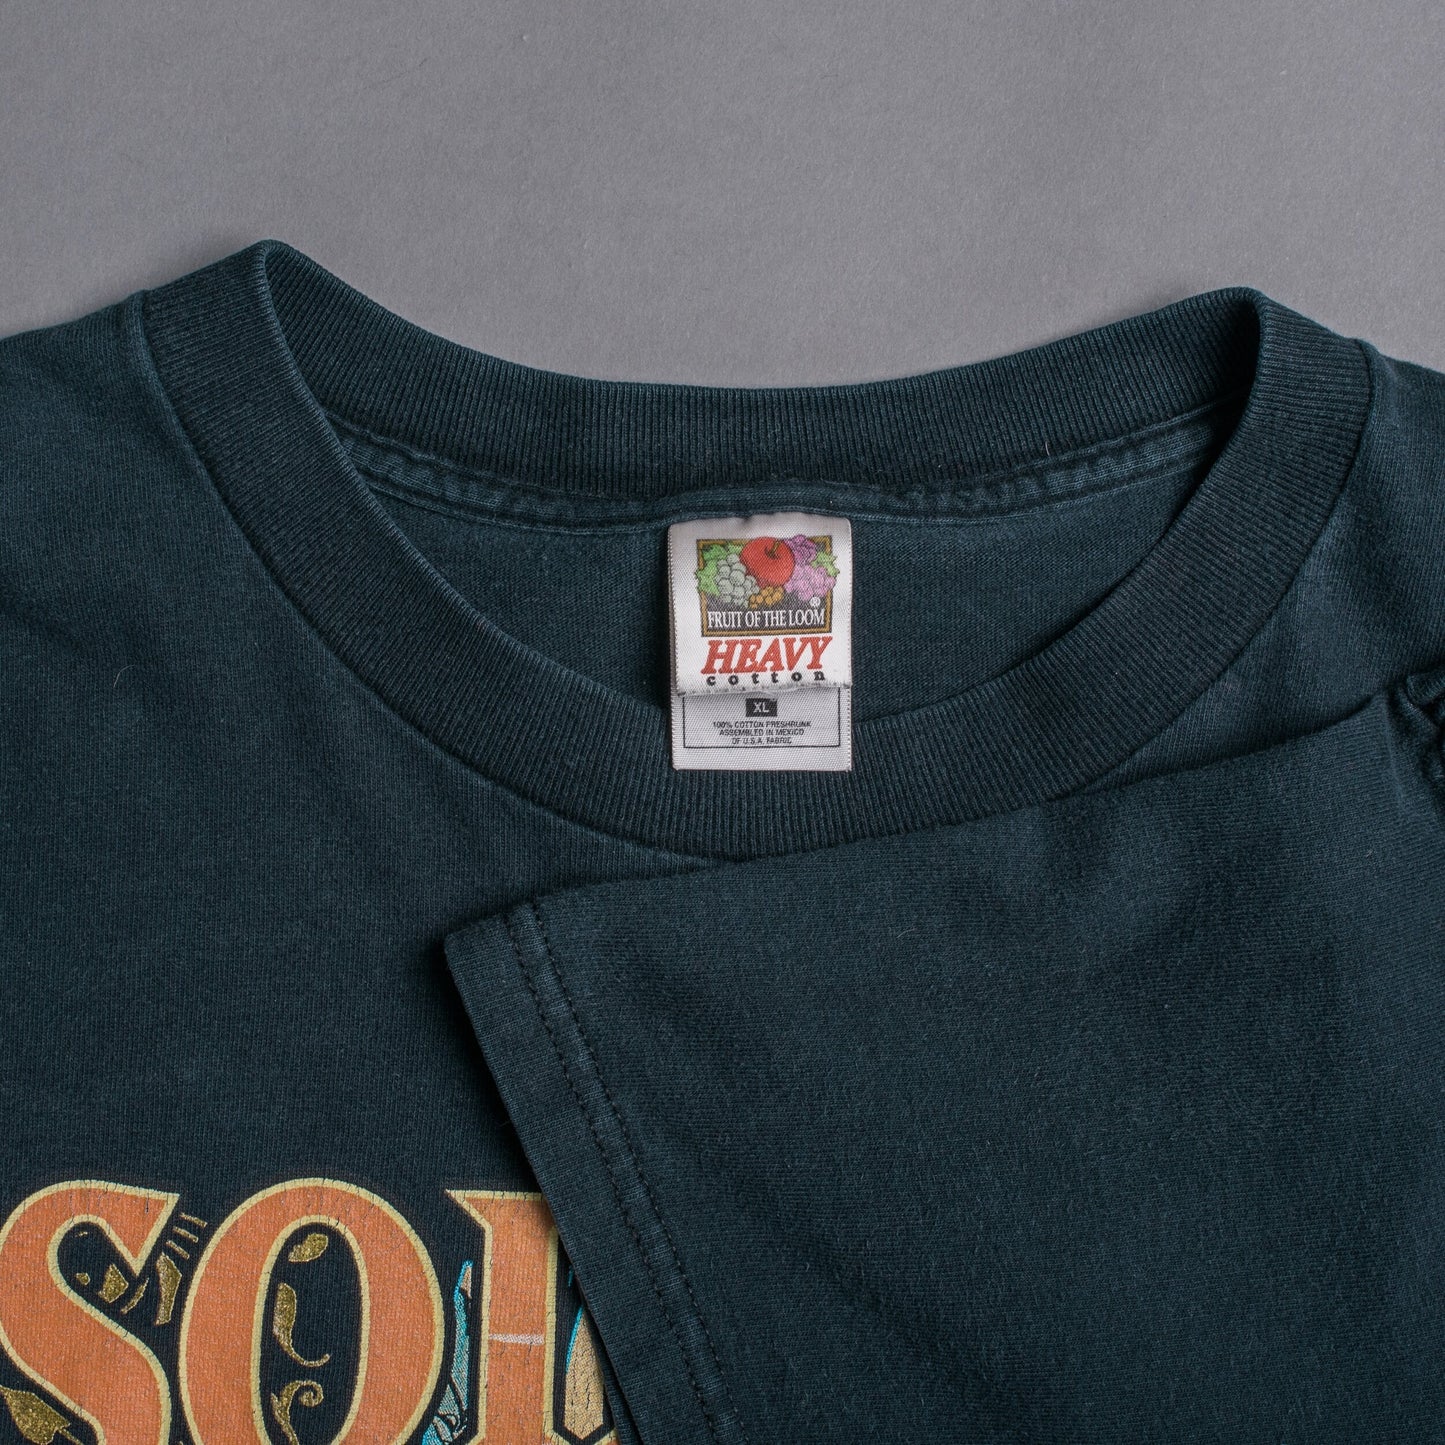 Vintage 90’s Soilent Green Sewn Mouth Secretes T-Shirt